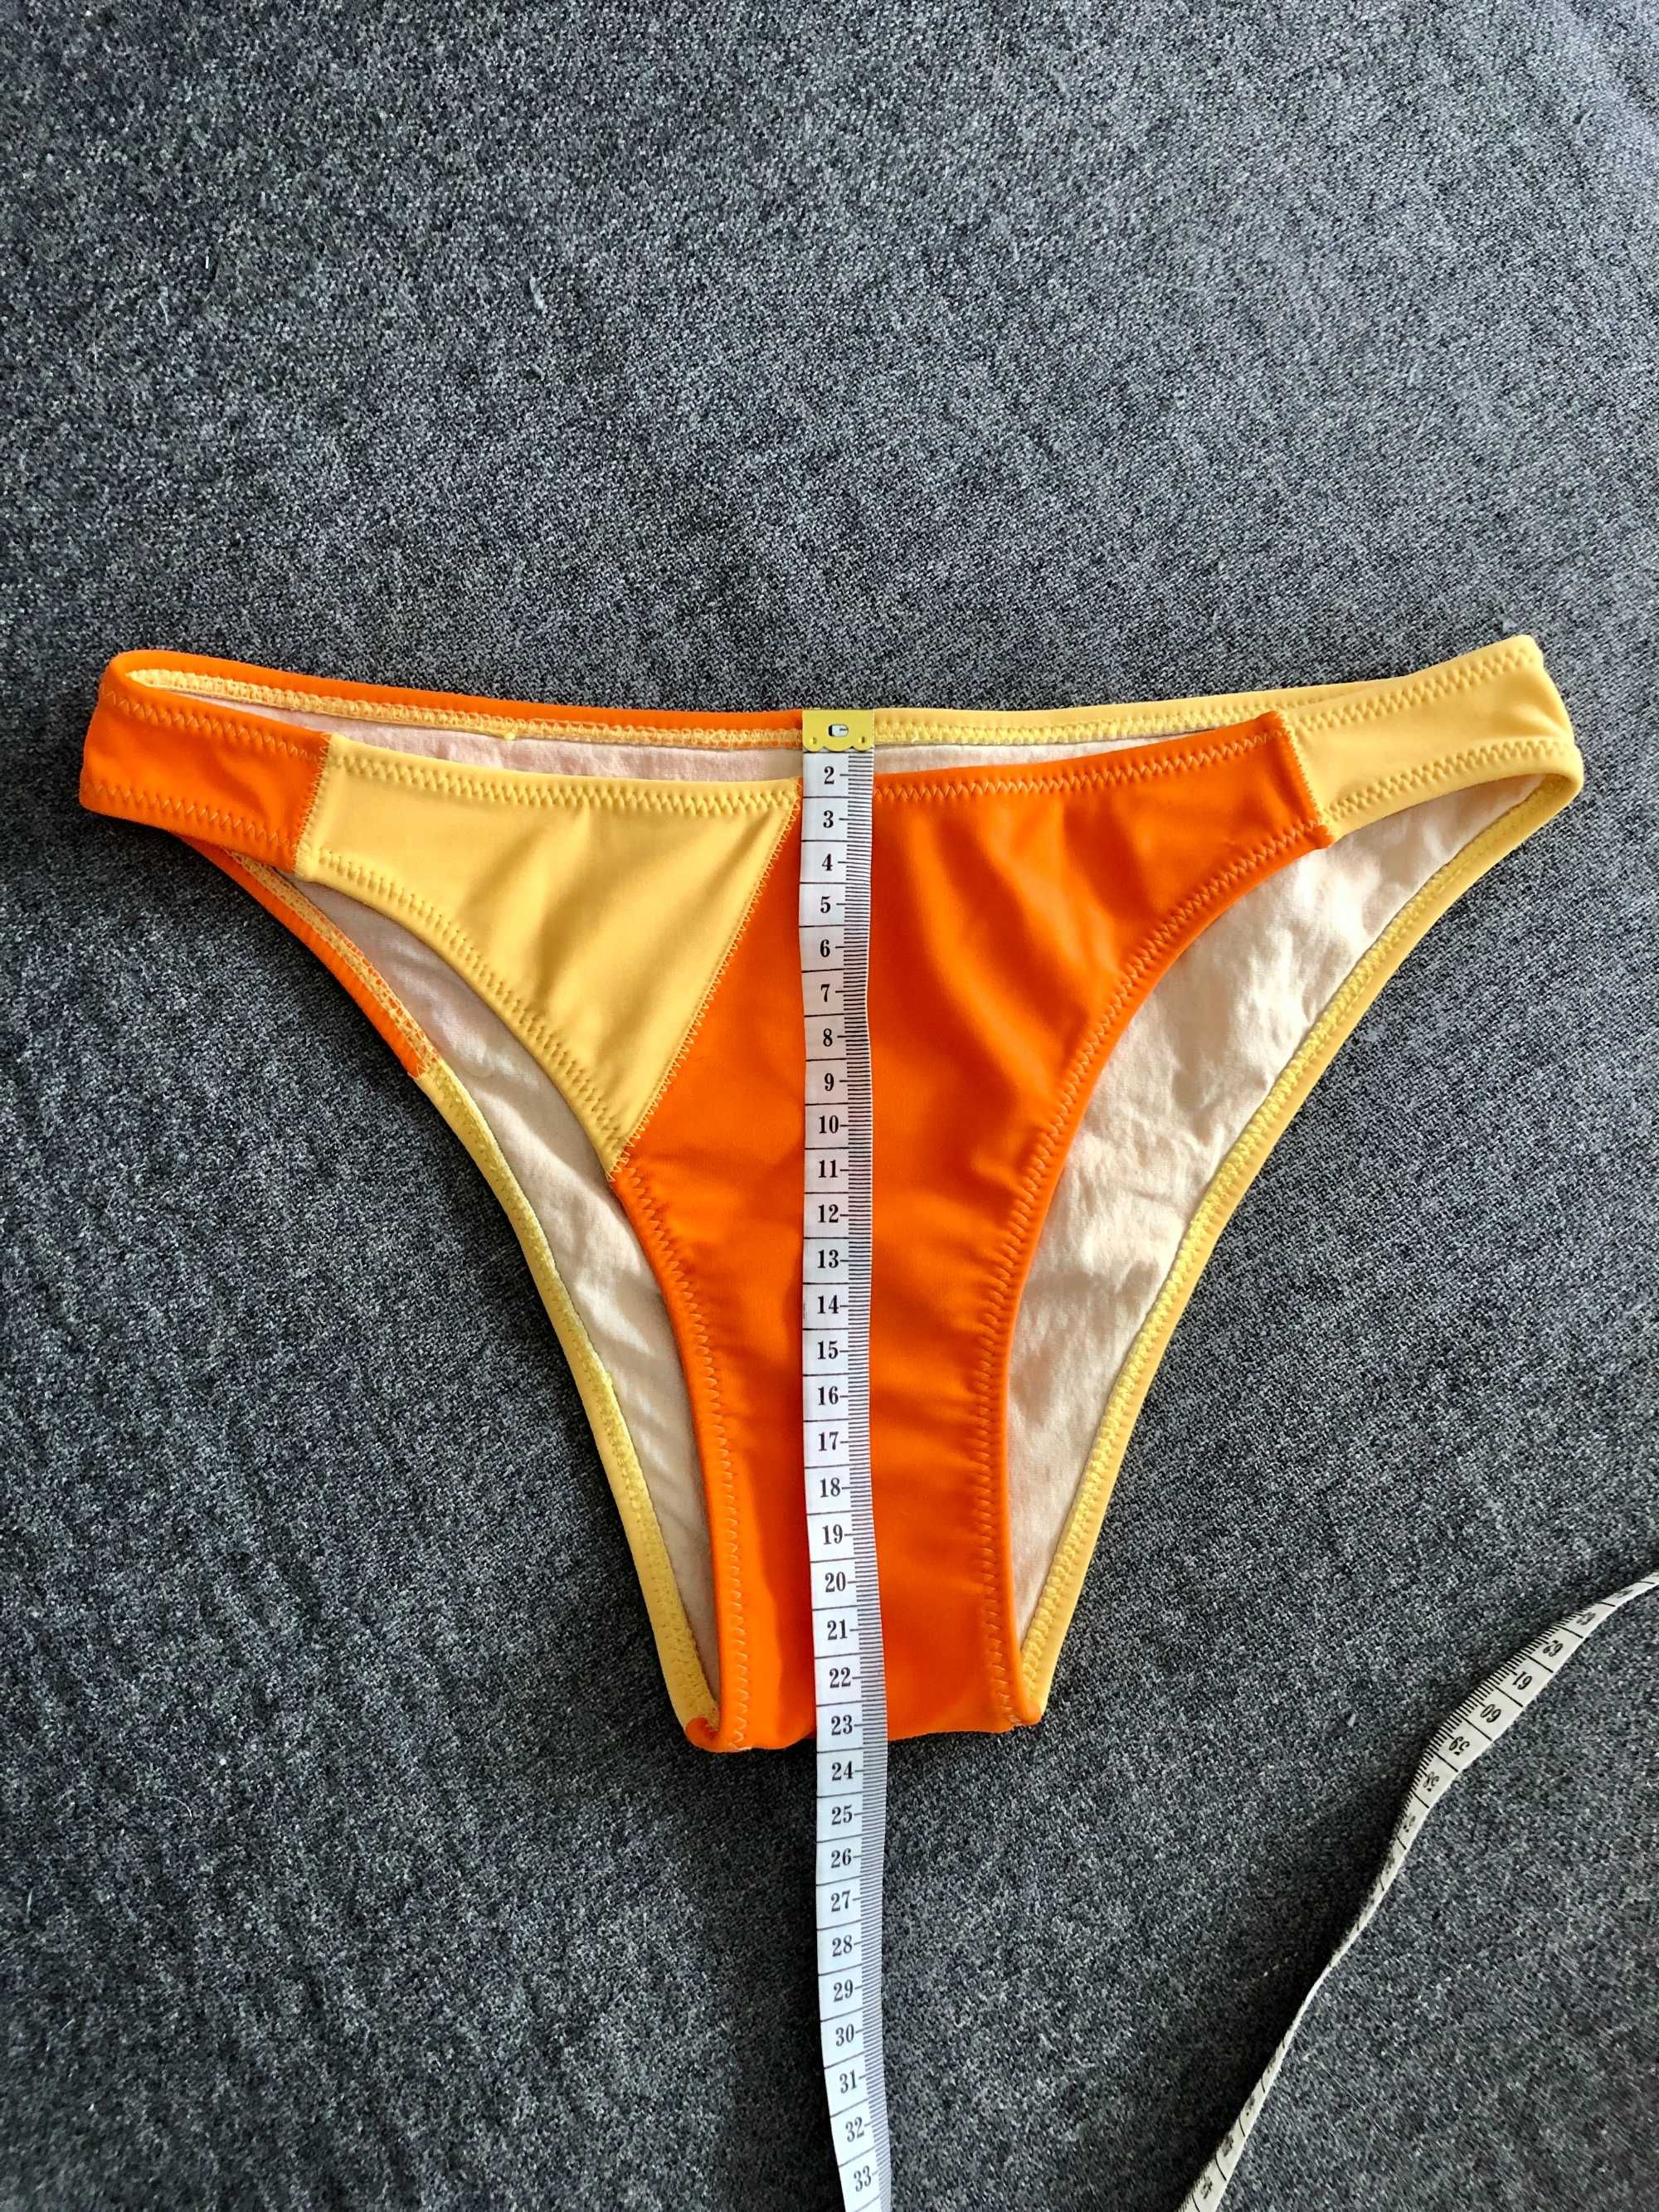 Cueca Bikini Calzedonia laranja e amarela